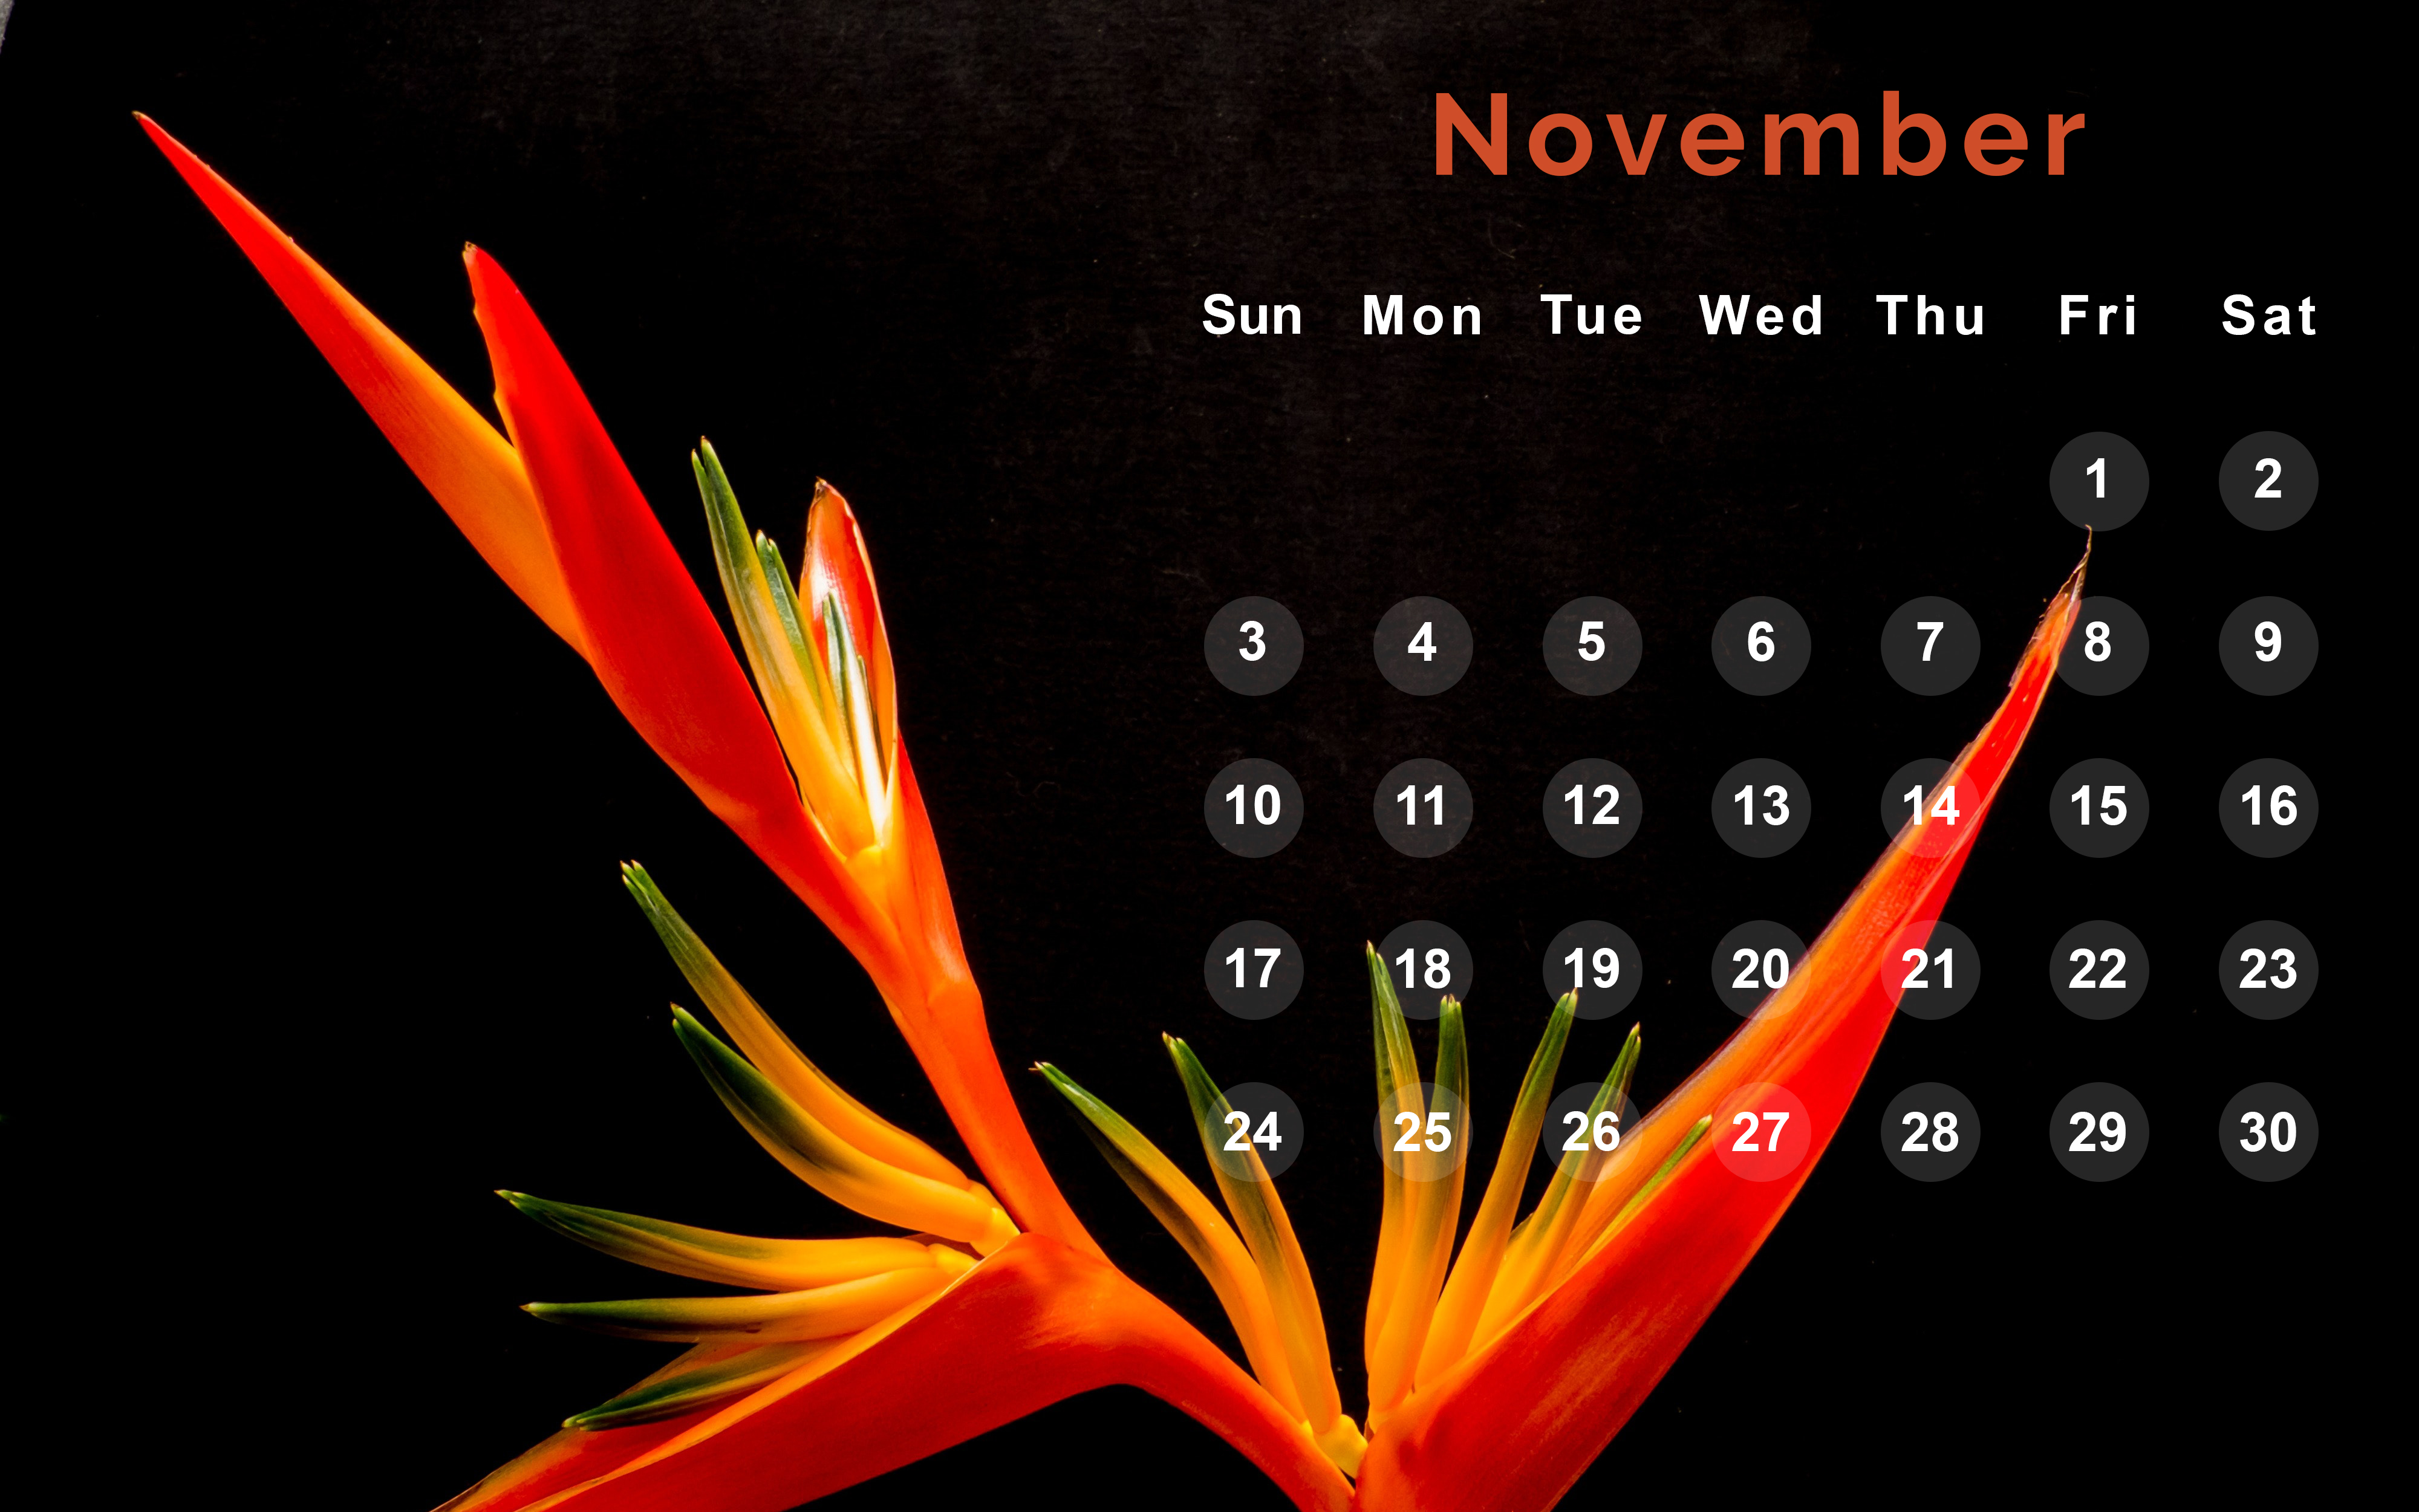 November 2019 Wallpaper With Calendar - Red Birds Of Paradise Flower - HD Wallpaper 